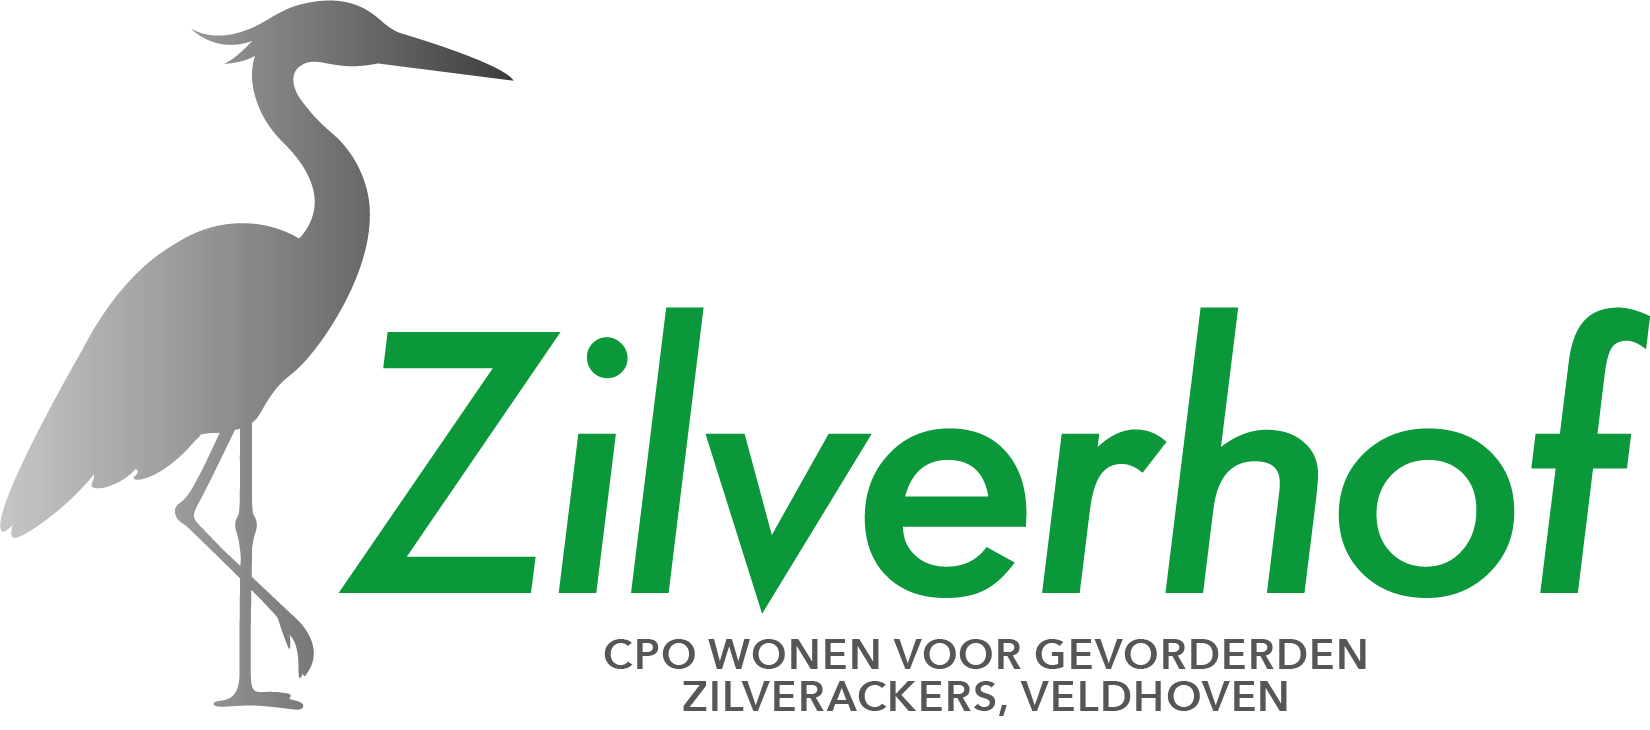 Zilverhof